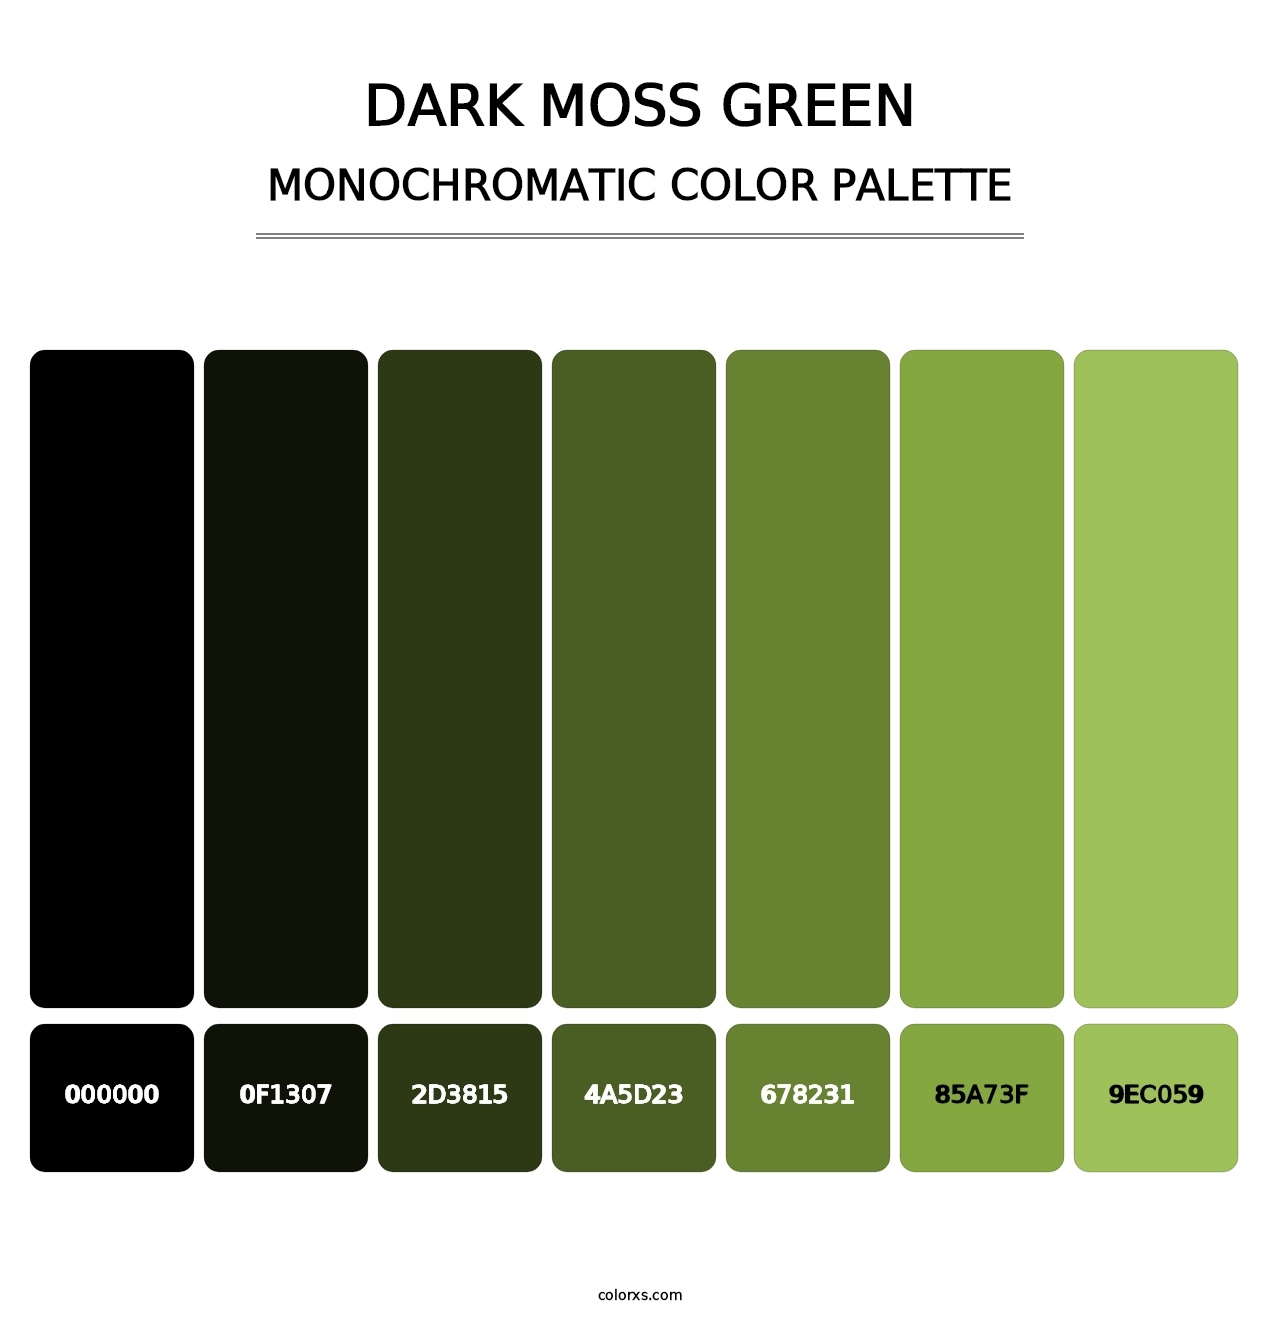 Dark Moss Green - Monochromatic Color Palette